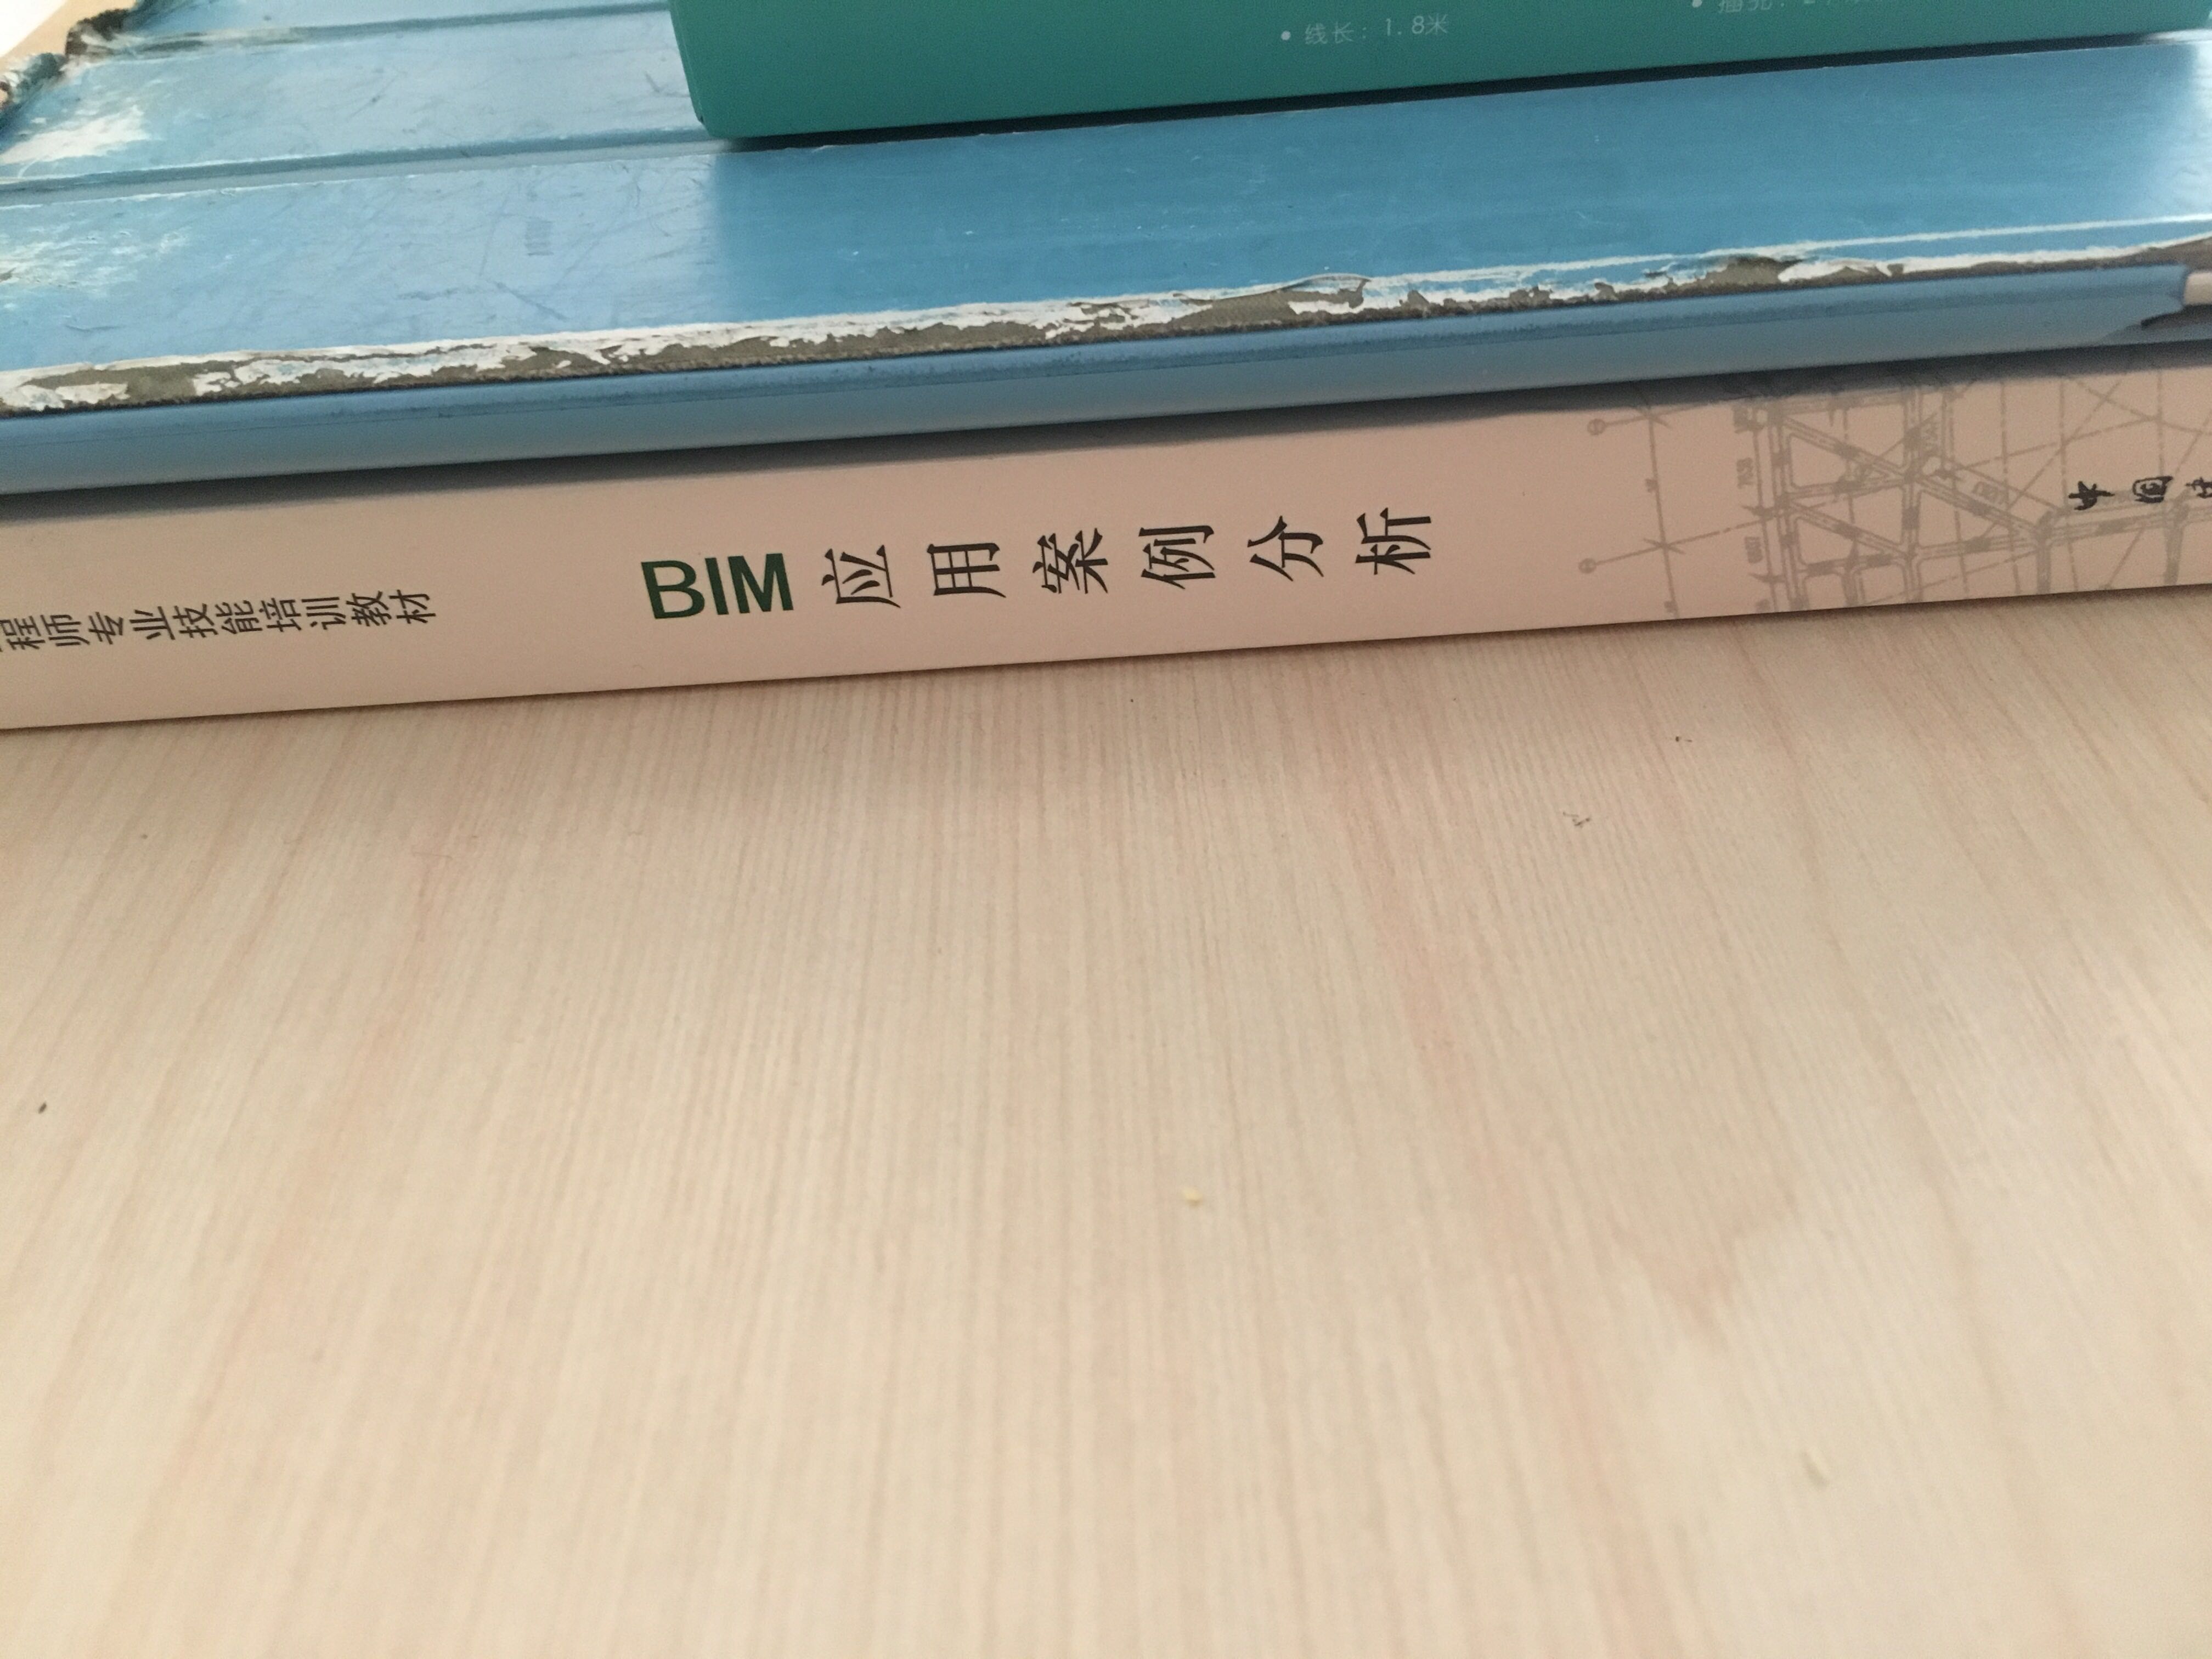 BIM案例分析的非常好，需要好好学习！建筑工业出版社靠谱！